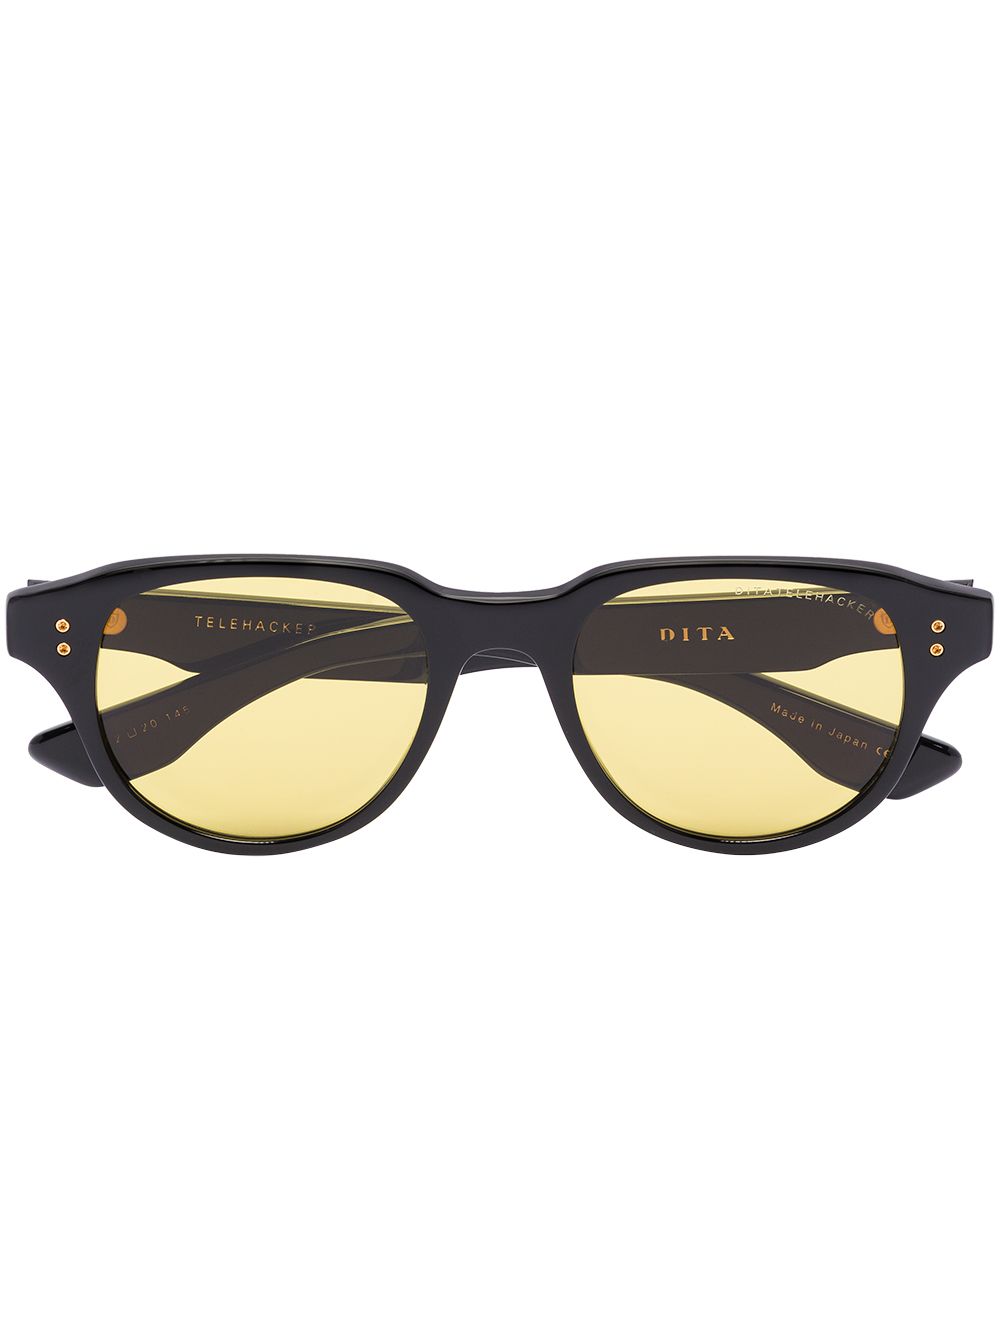 Dita Eyewear Telehacker round-frame sunglasses - Black von Dita Eyewear